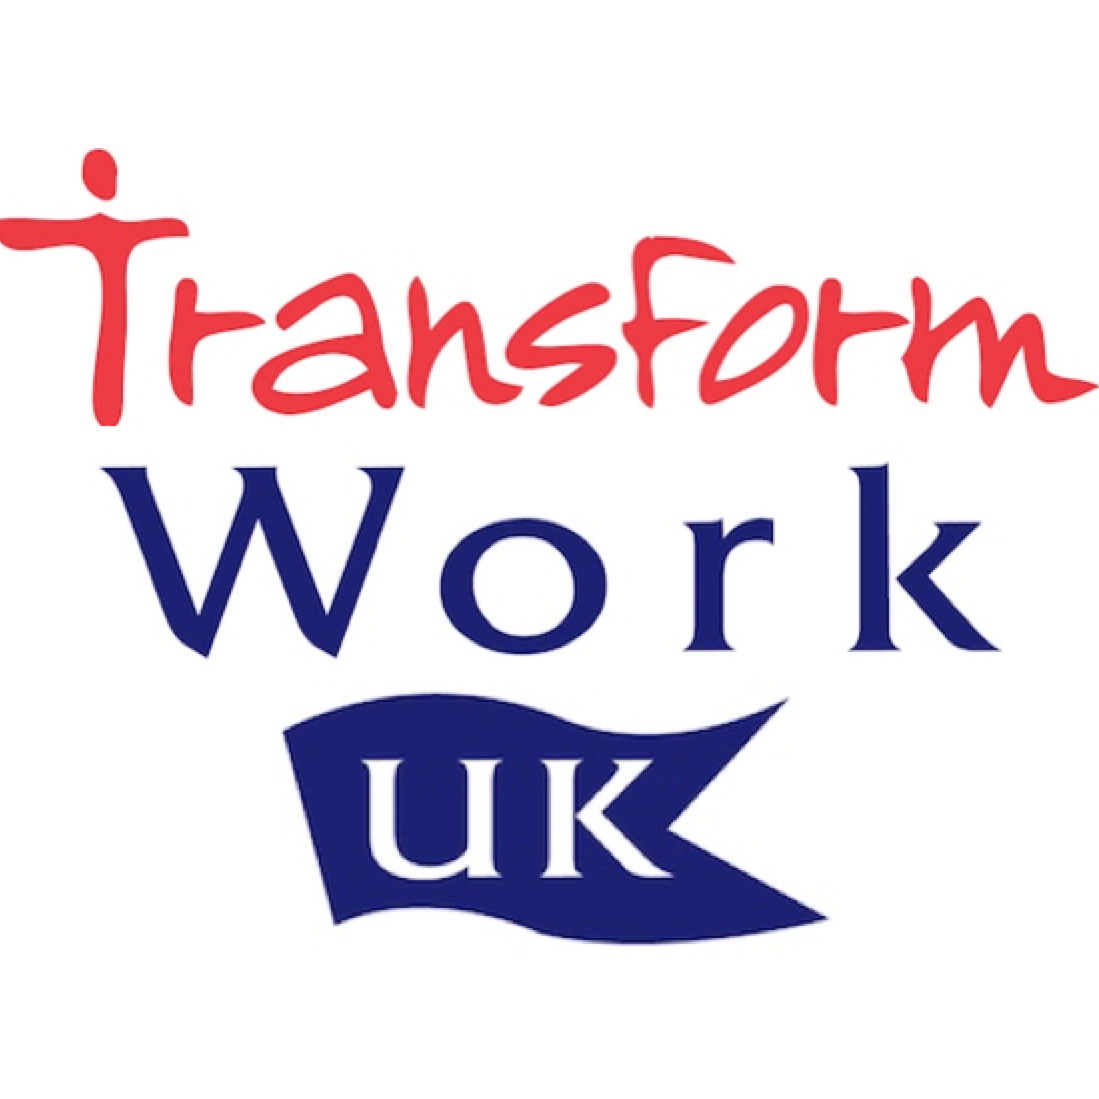 Transform Work UK